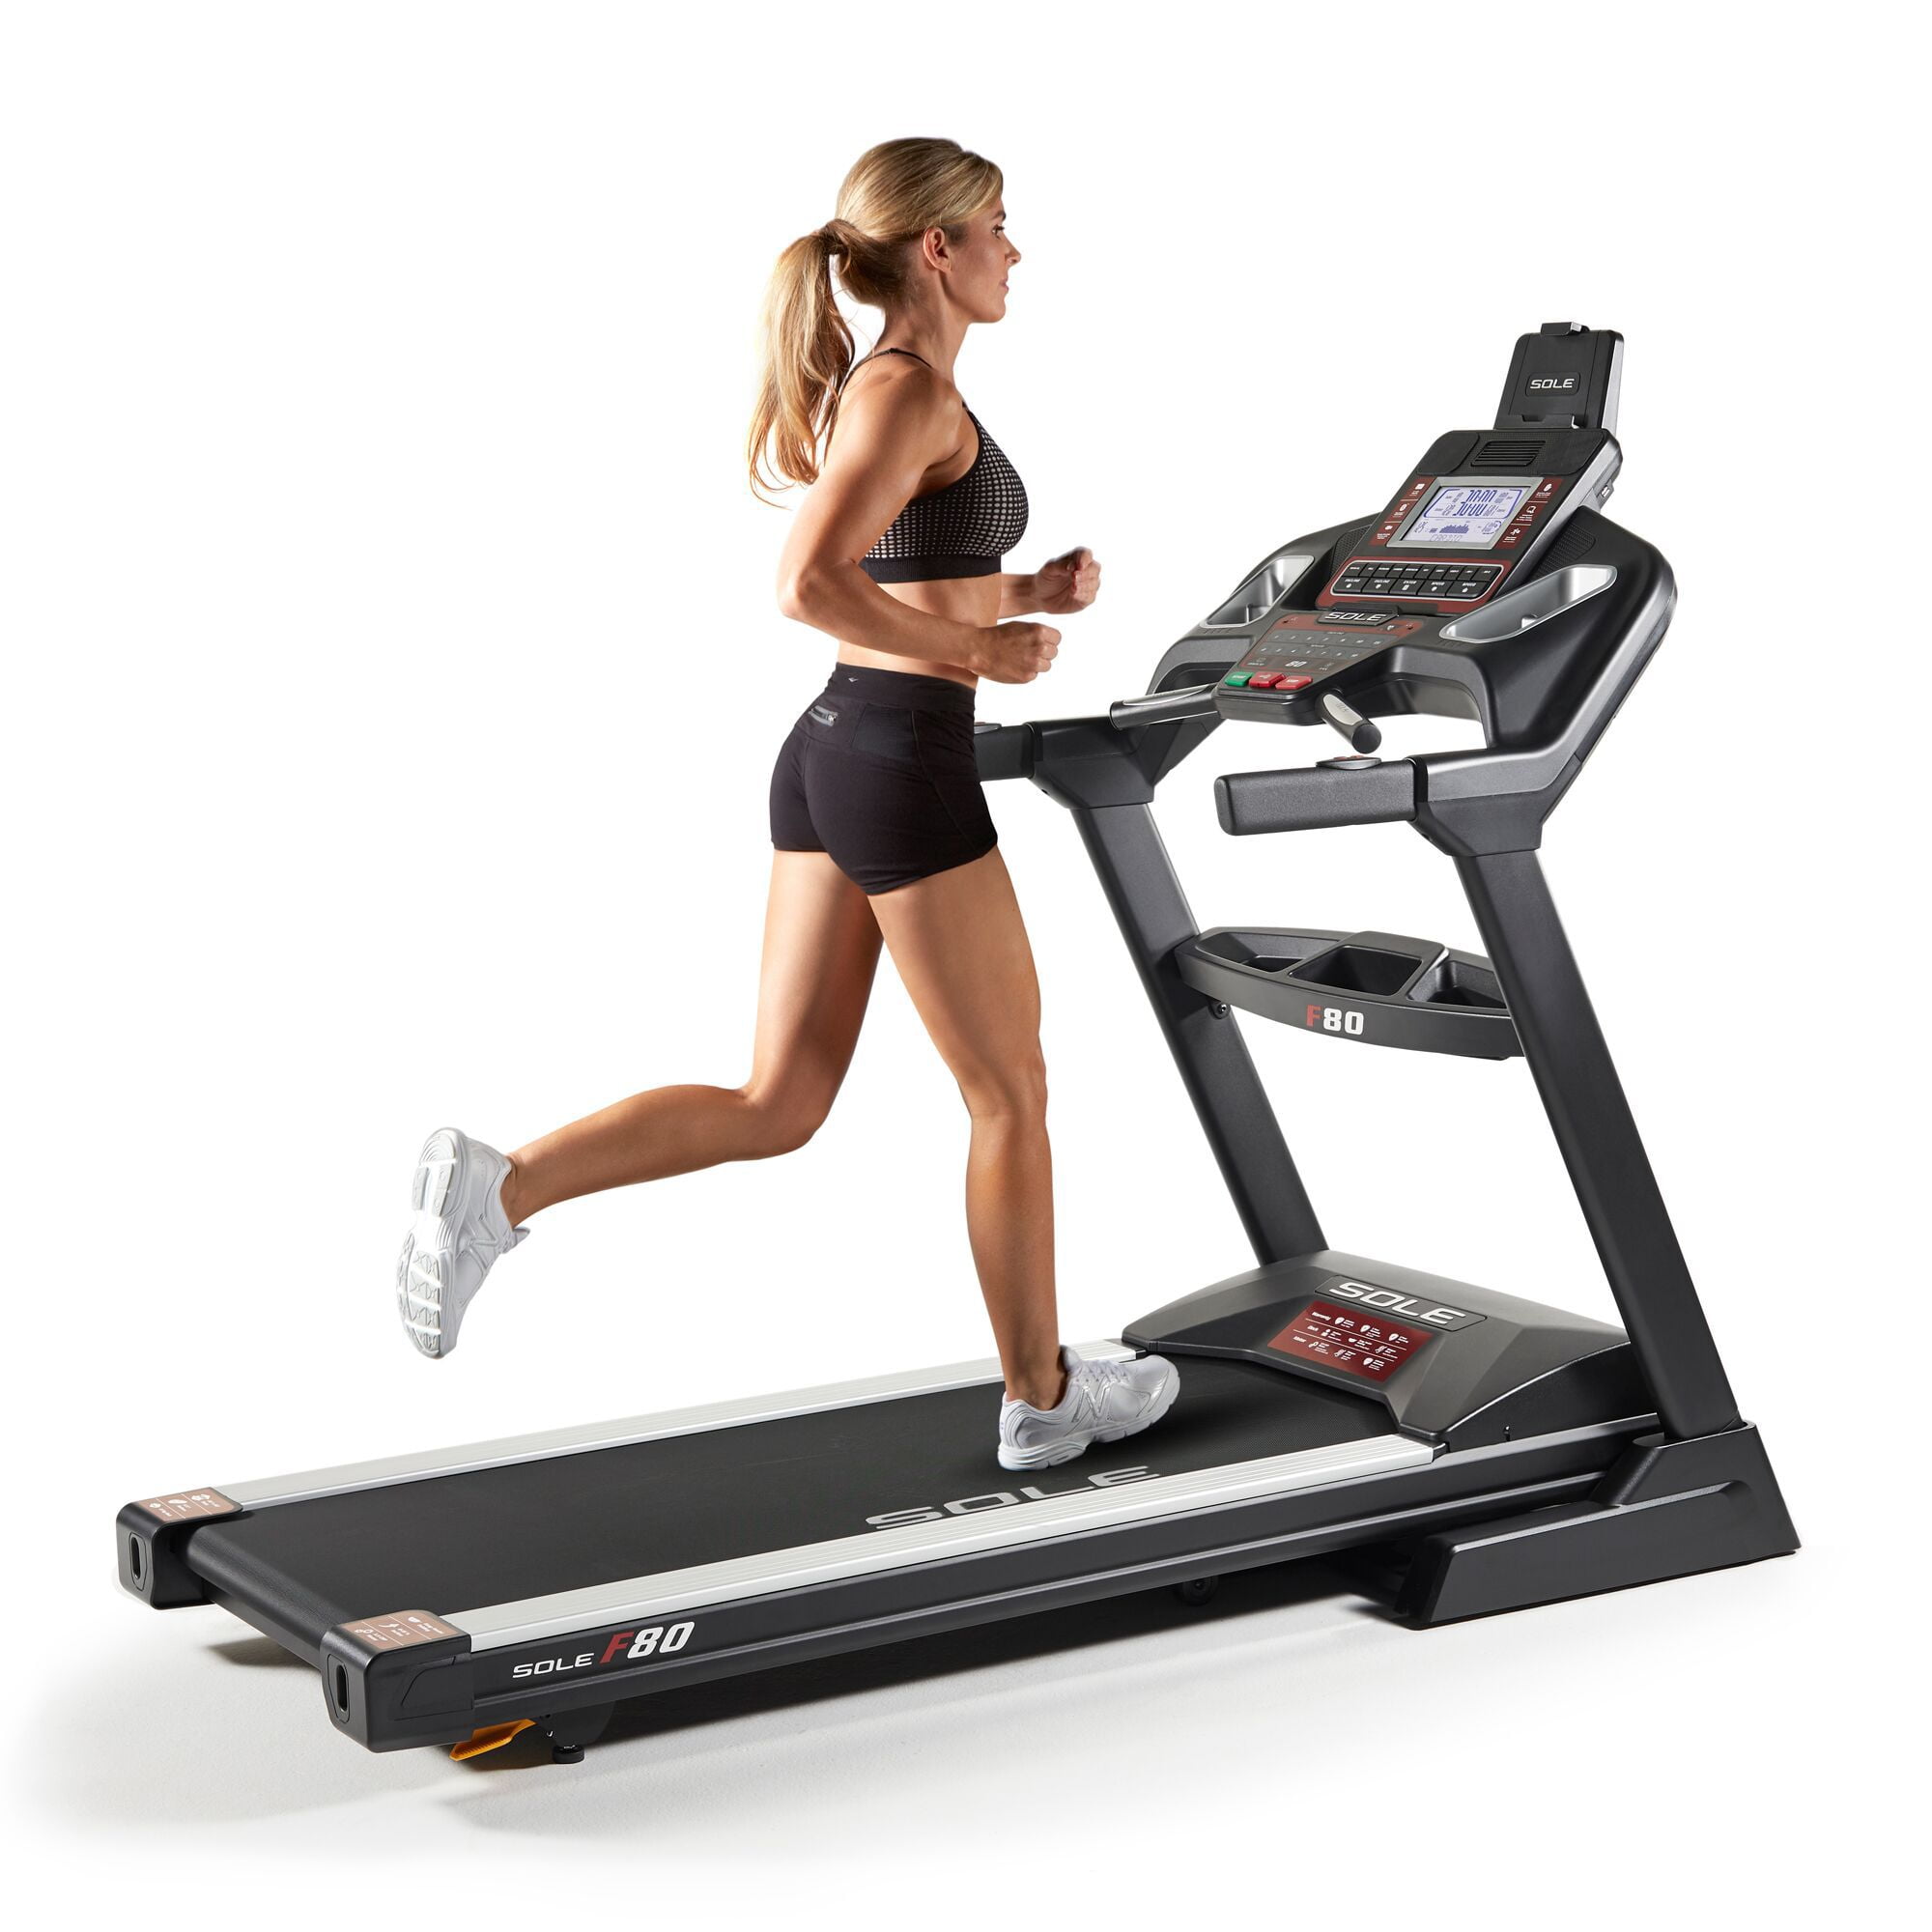 Treadmill 15a 15amp Circuit Breaker Sole Fitness F80 F85 585812 